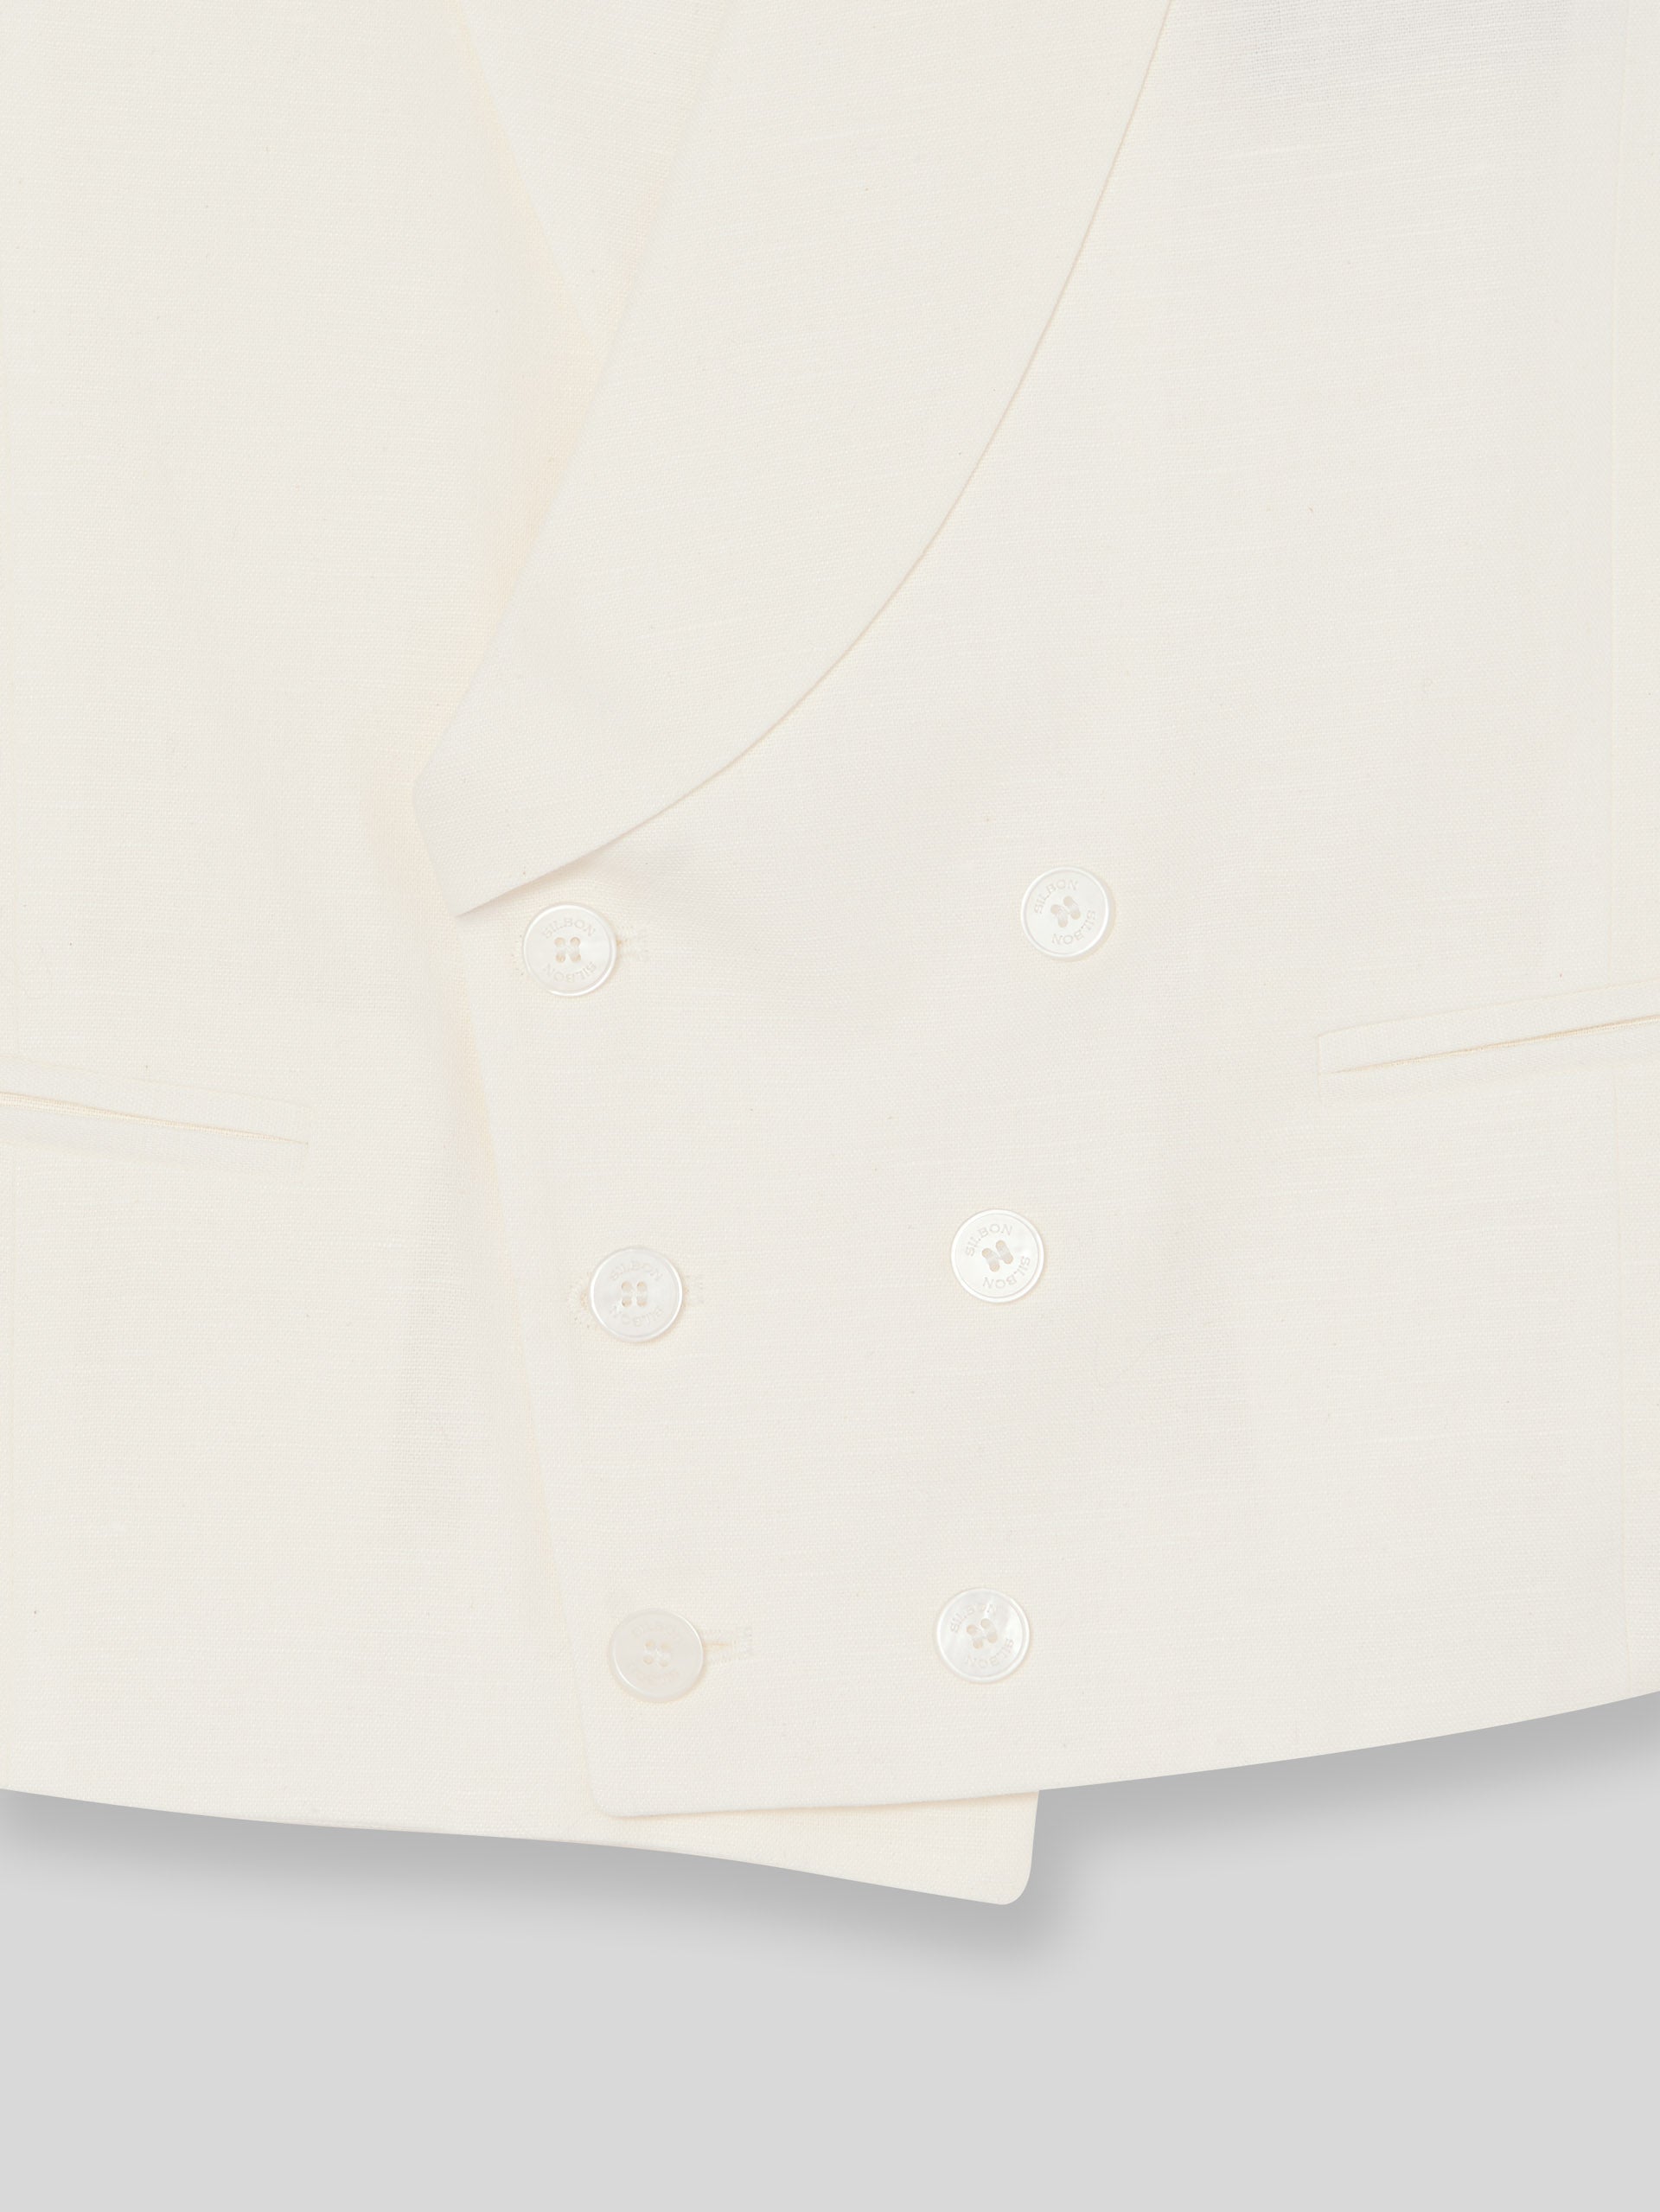 Off-white round neck waistcoat